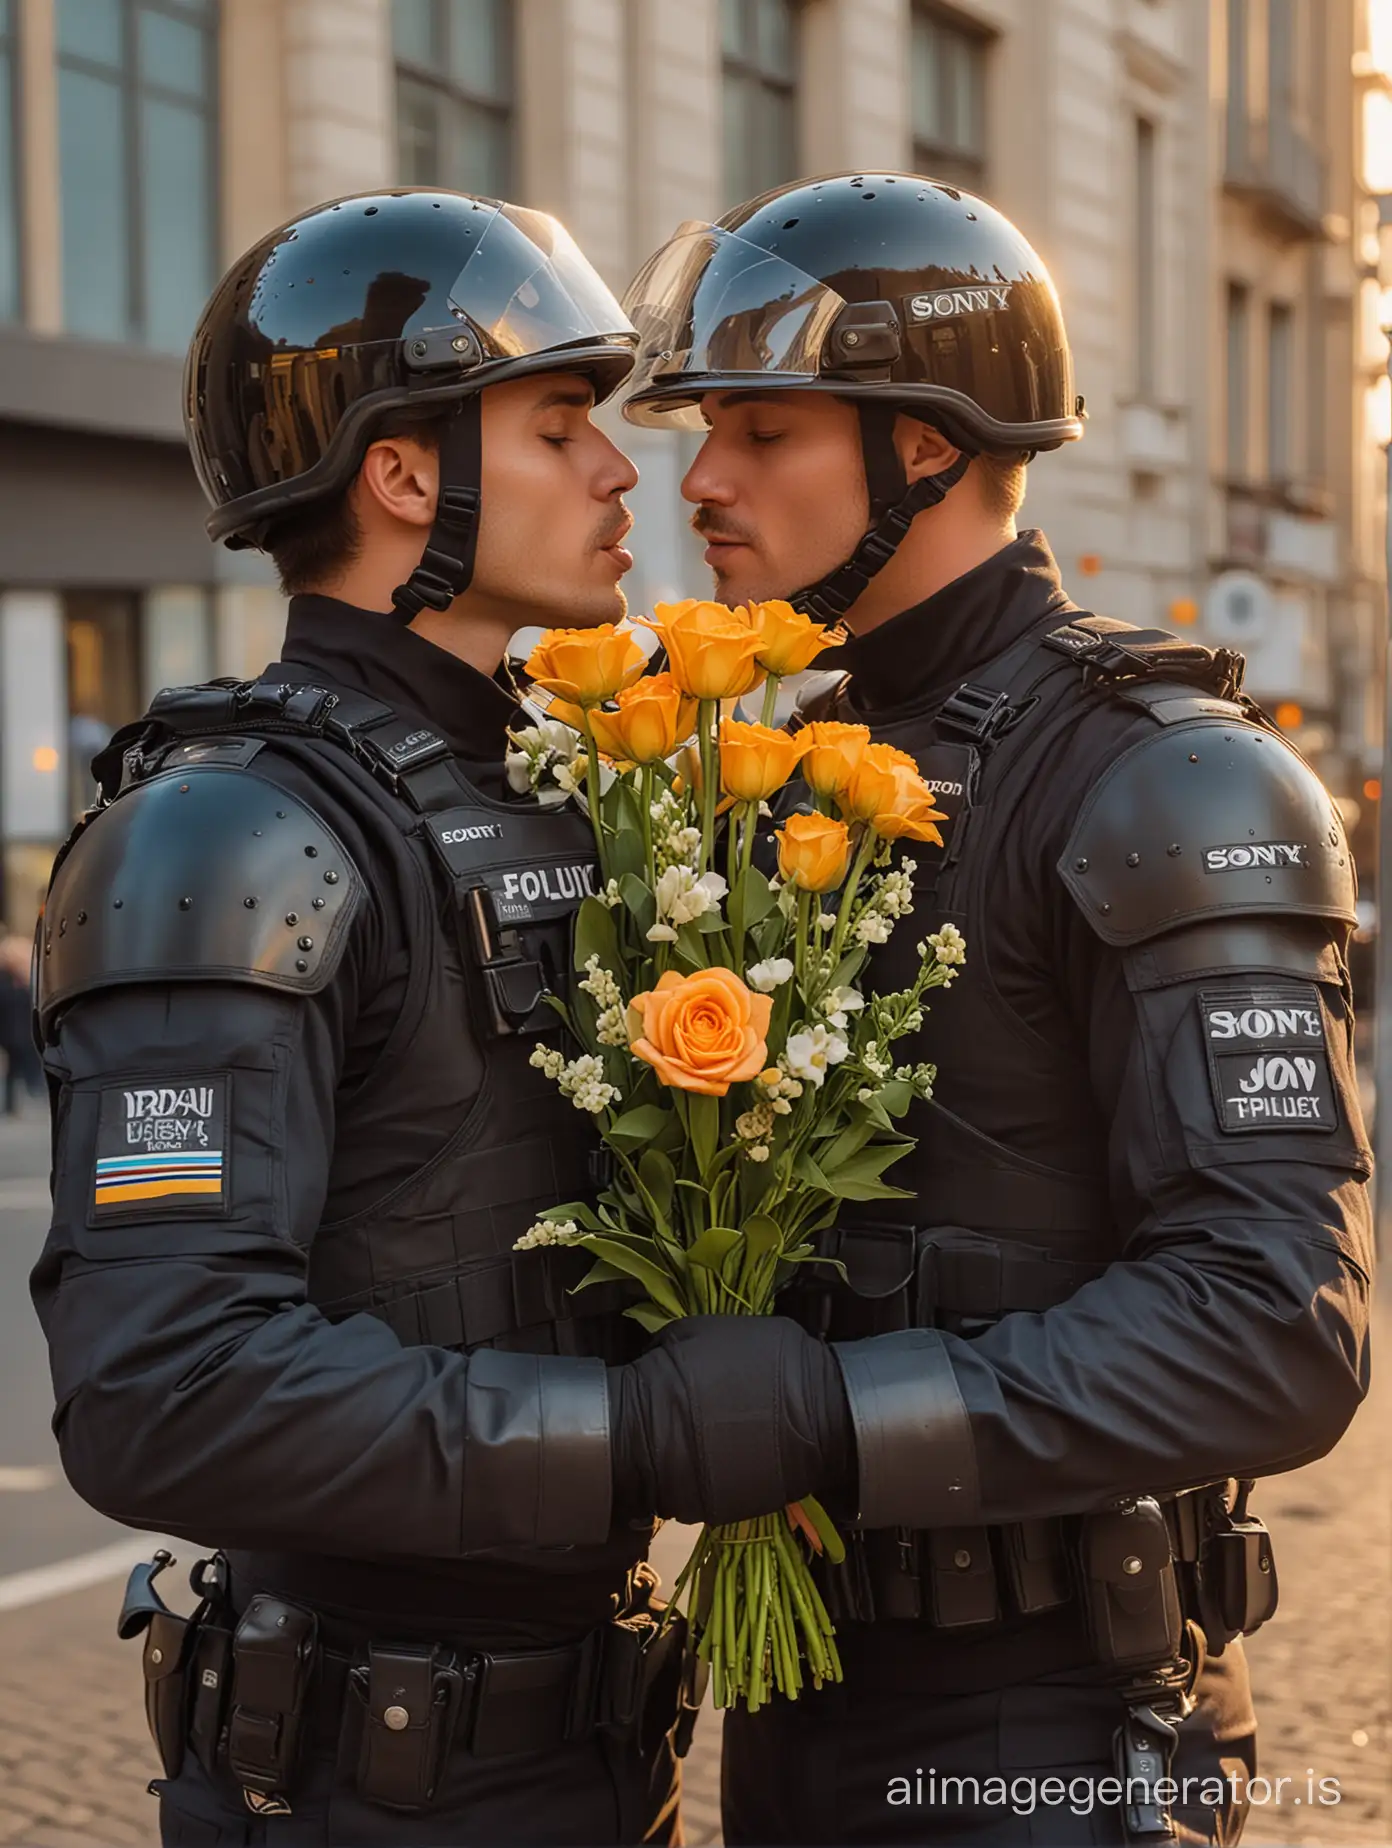 Passionate-Embrace-Between-Riot-GearClad-Policemen-Amidst-Urban-Golden-Hour